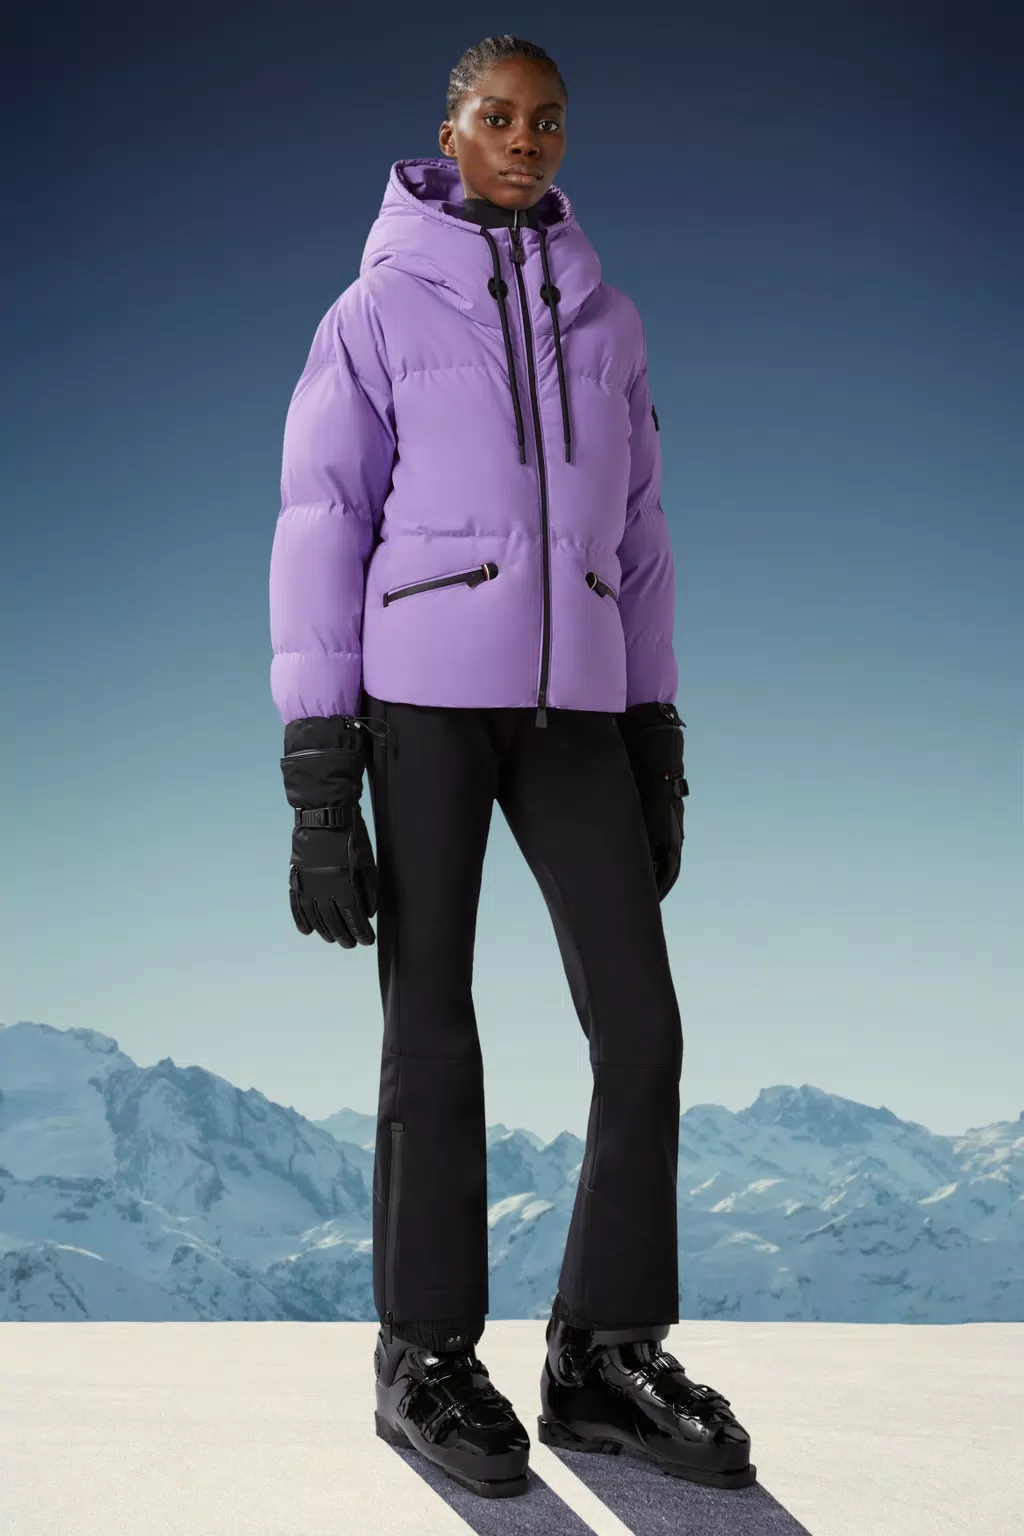 Pantalon De Esqui Mujer